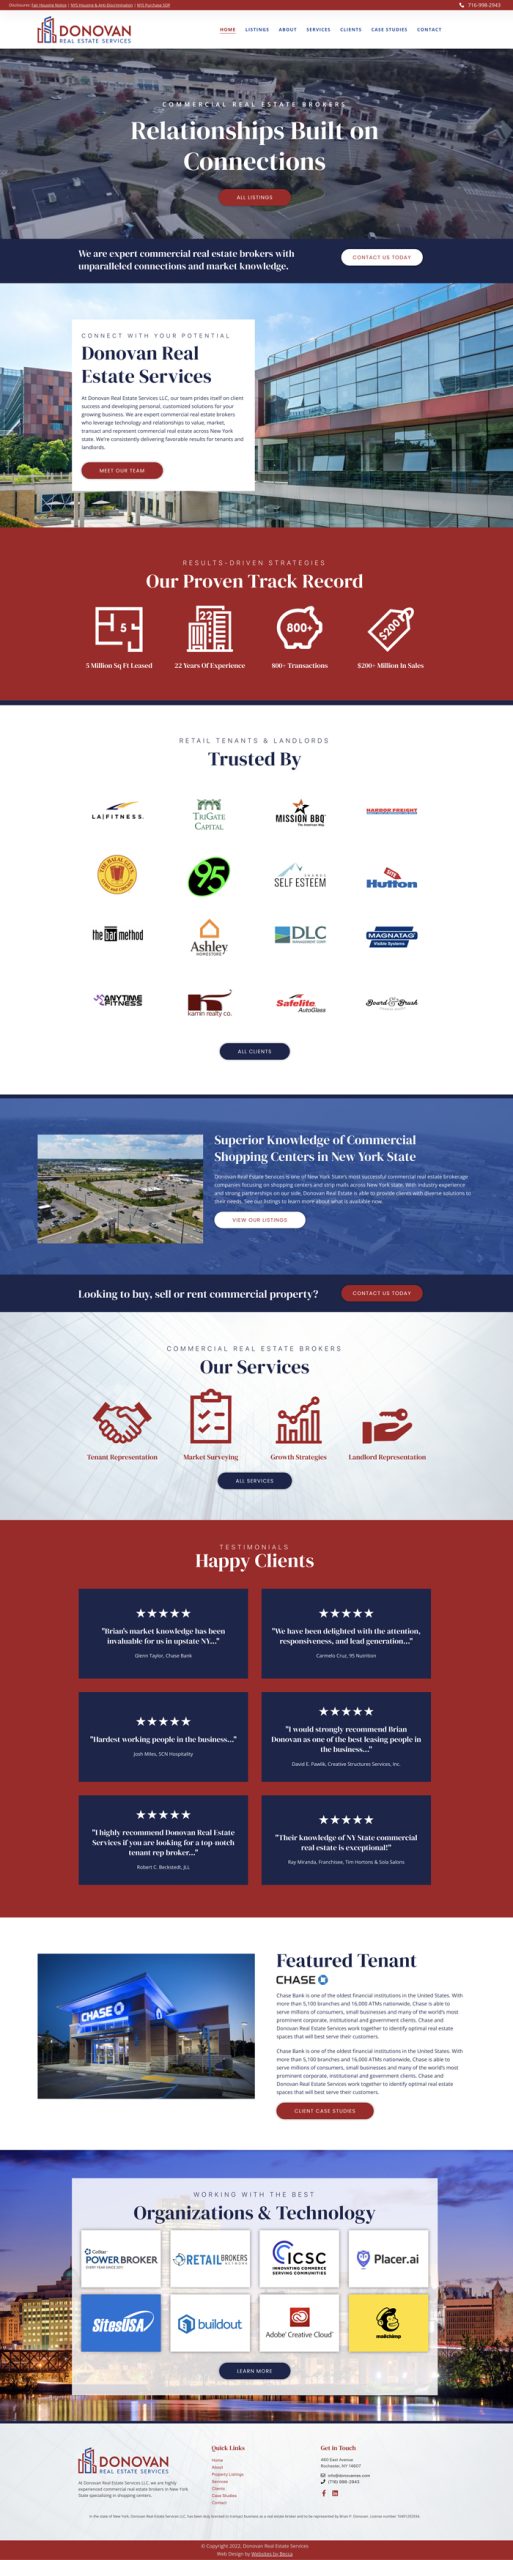 New Website - Donovan Real Estate Services